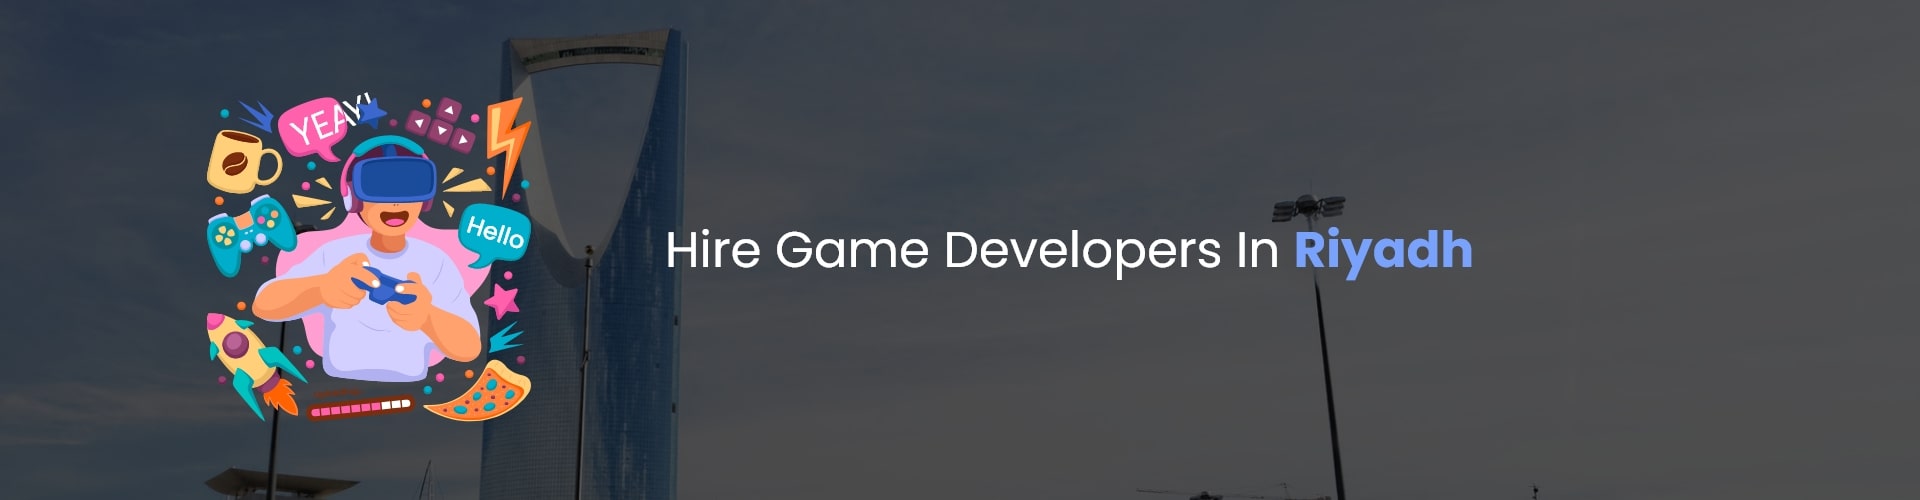 hire game developers in riyadh